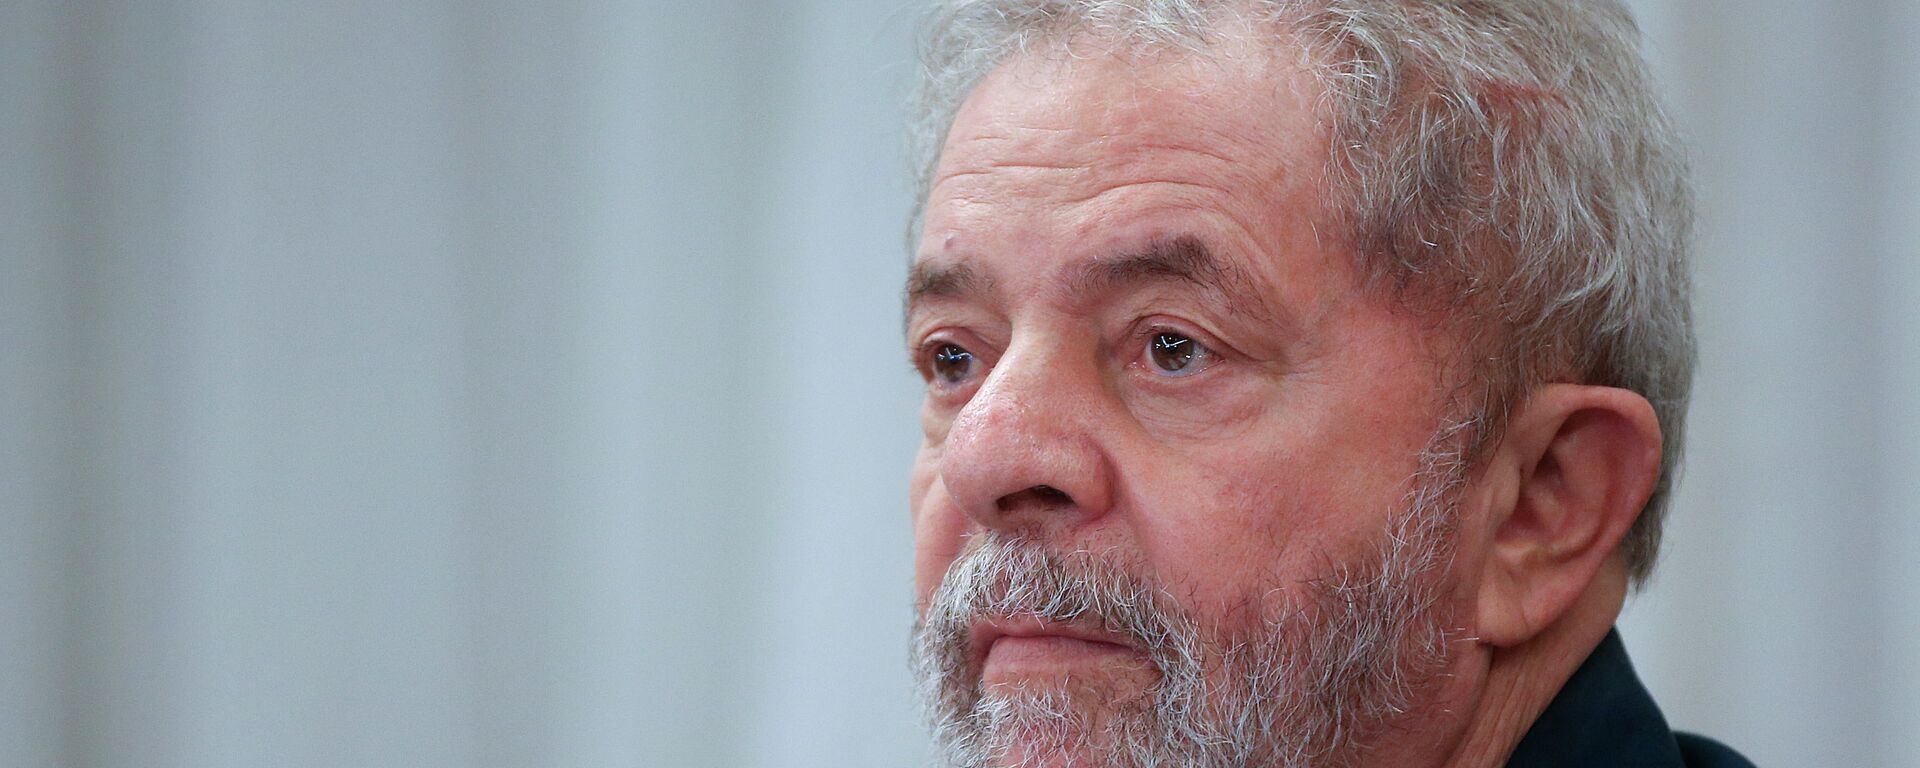 Brazil's former President Luiz Inacio Lula da Silva attends an extraordinary Worker's Party leaders meeting in Sao Paulo, Brazil, Monday, March 30, 2015 - Sputnik Mundo, 1920, 23.03.2021